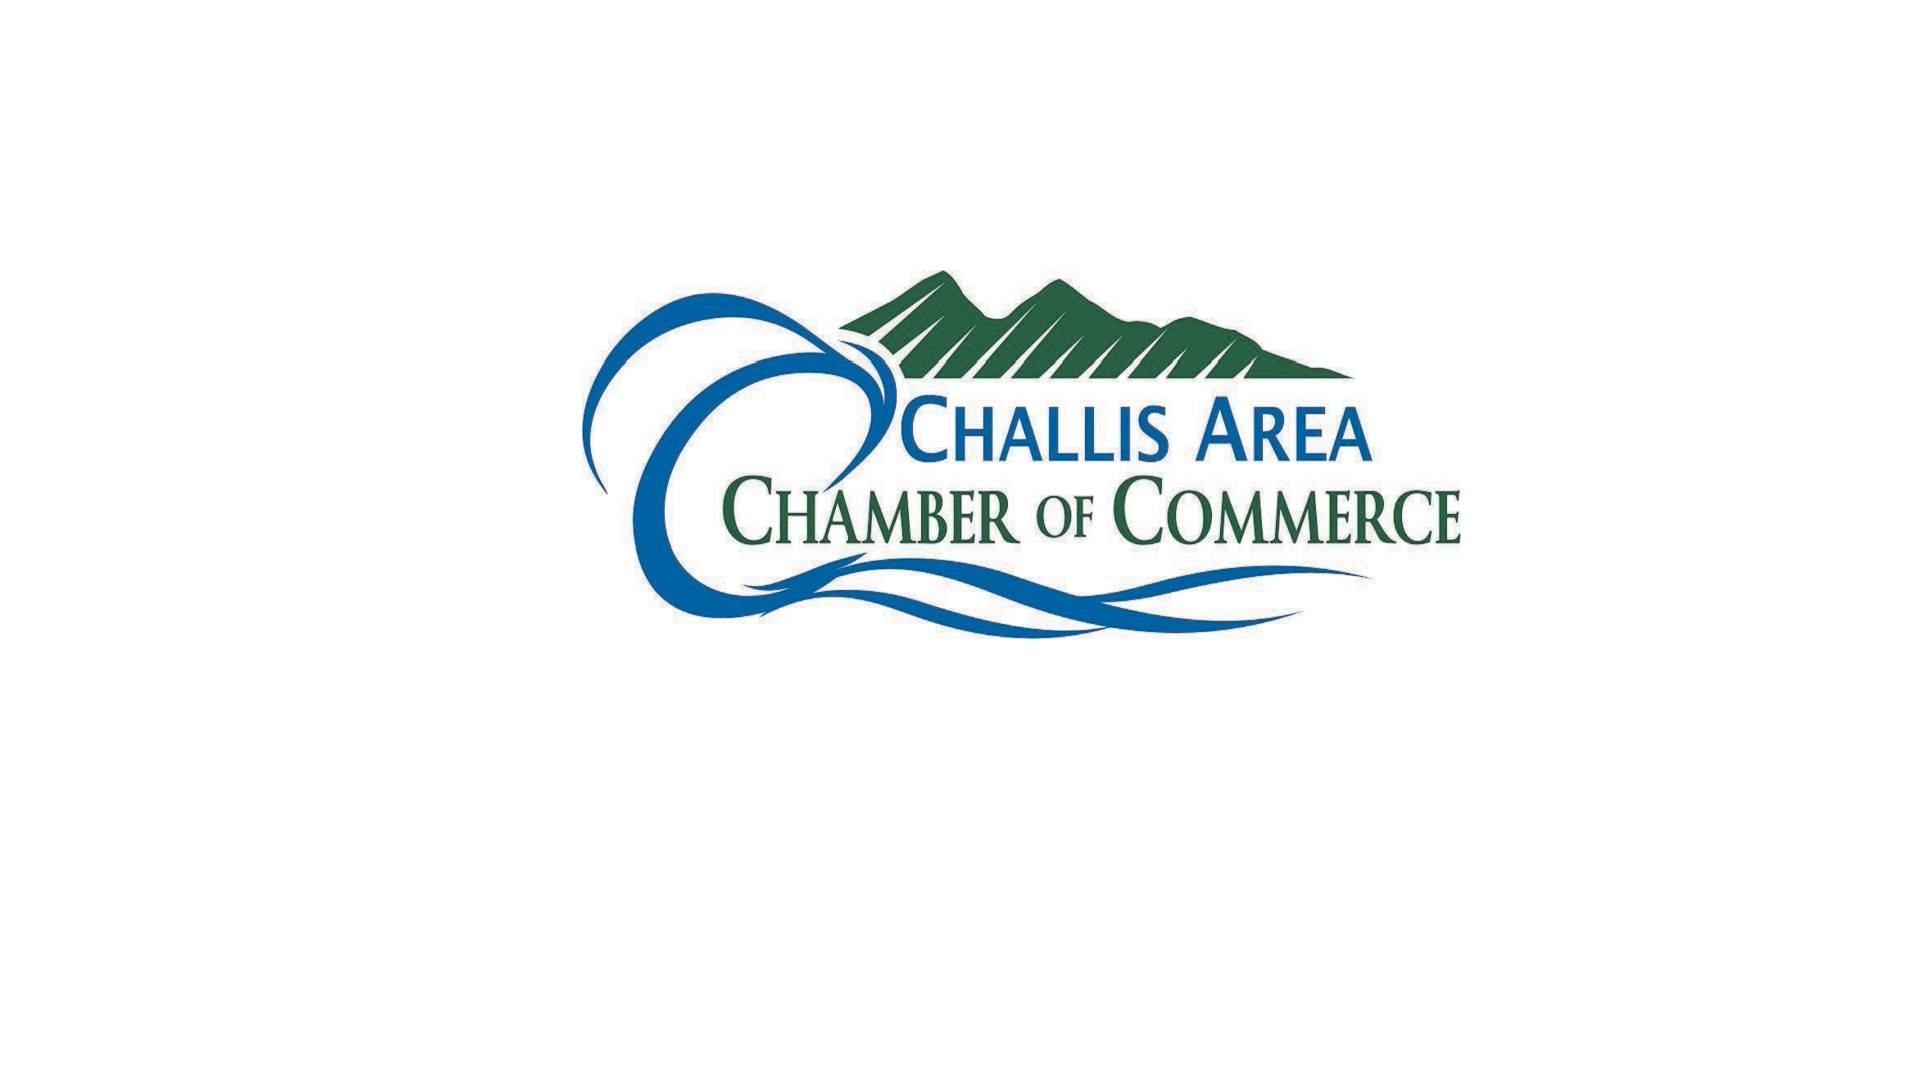 Challis Chamber of Commerce